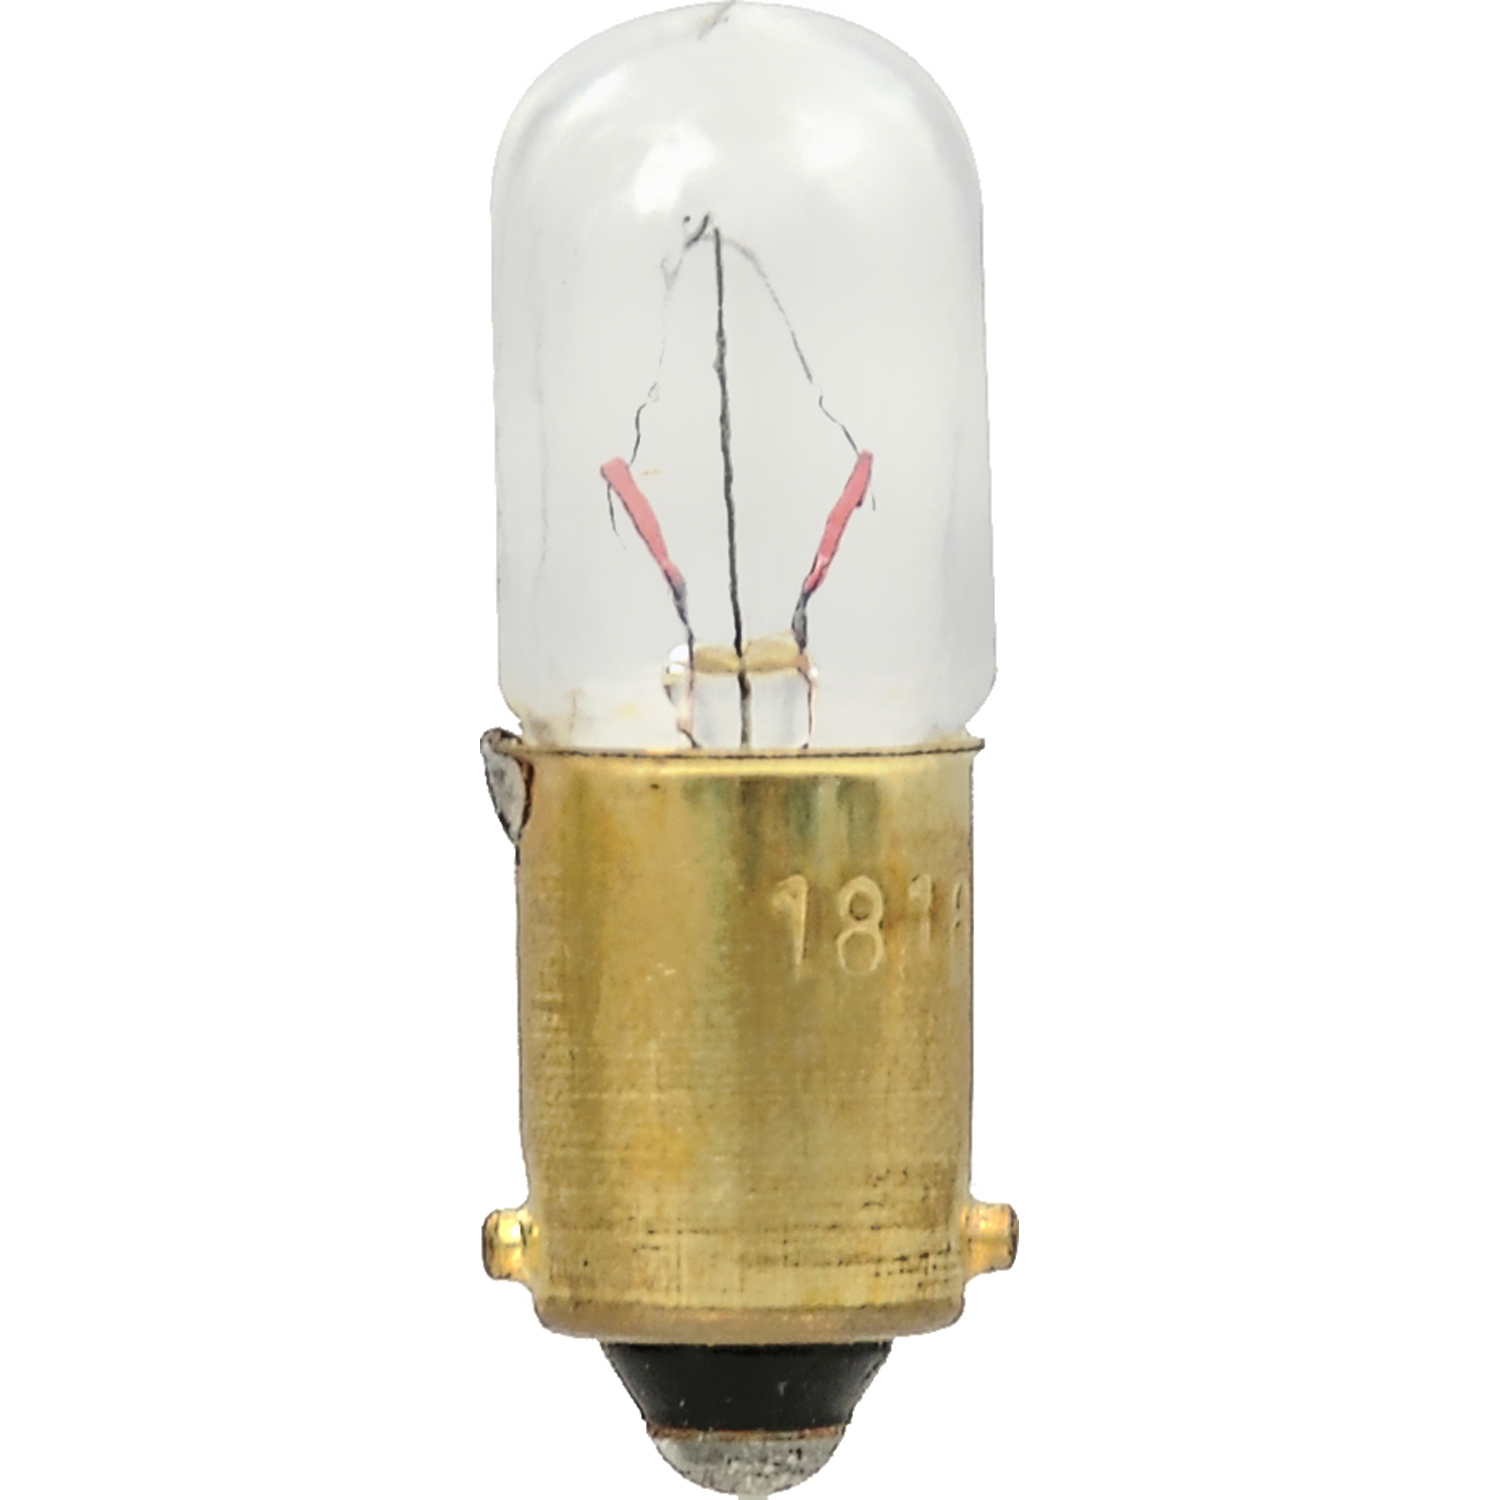 SYLVANIA RETAIL PACKS - 10-Pack Box Turn Signal Indicator Light Bulb - SYR 1816.TP